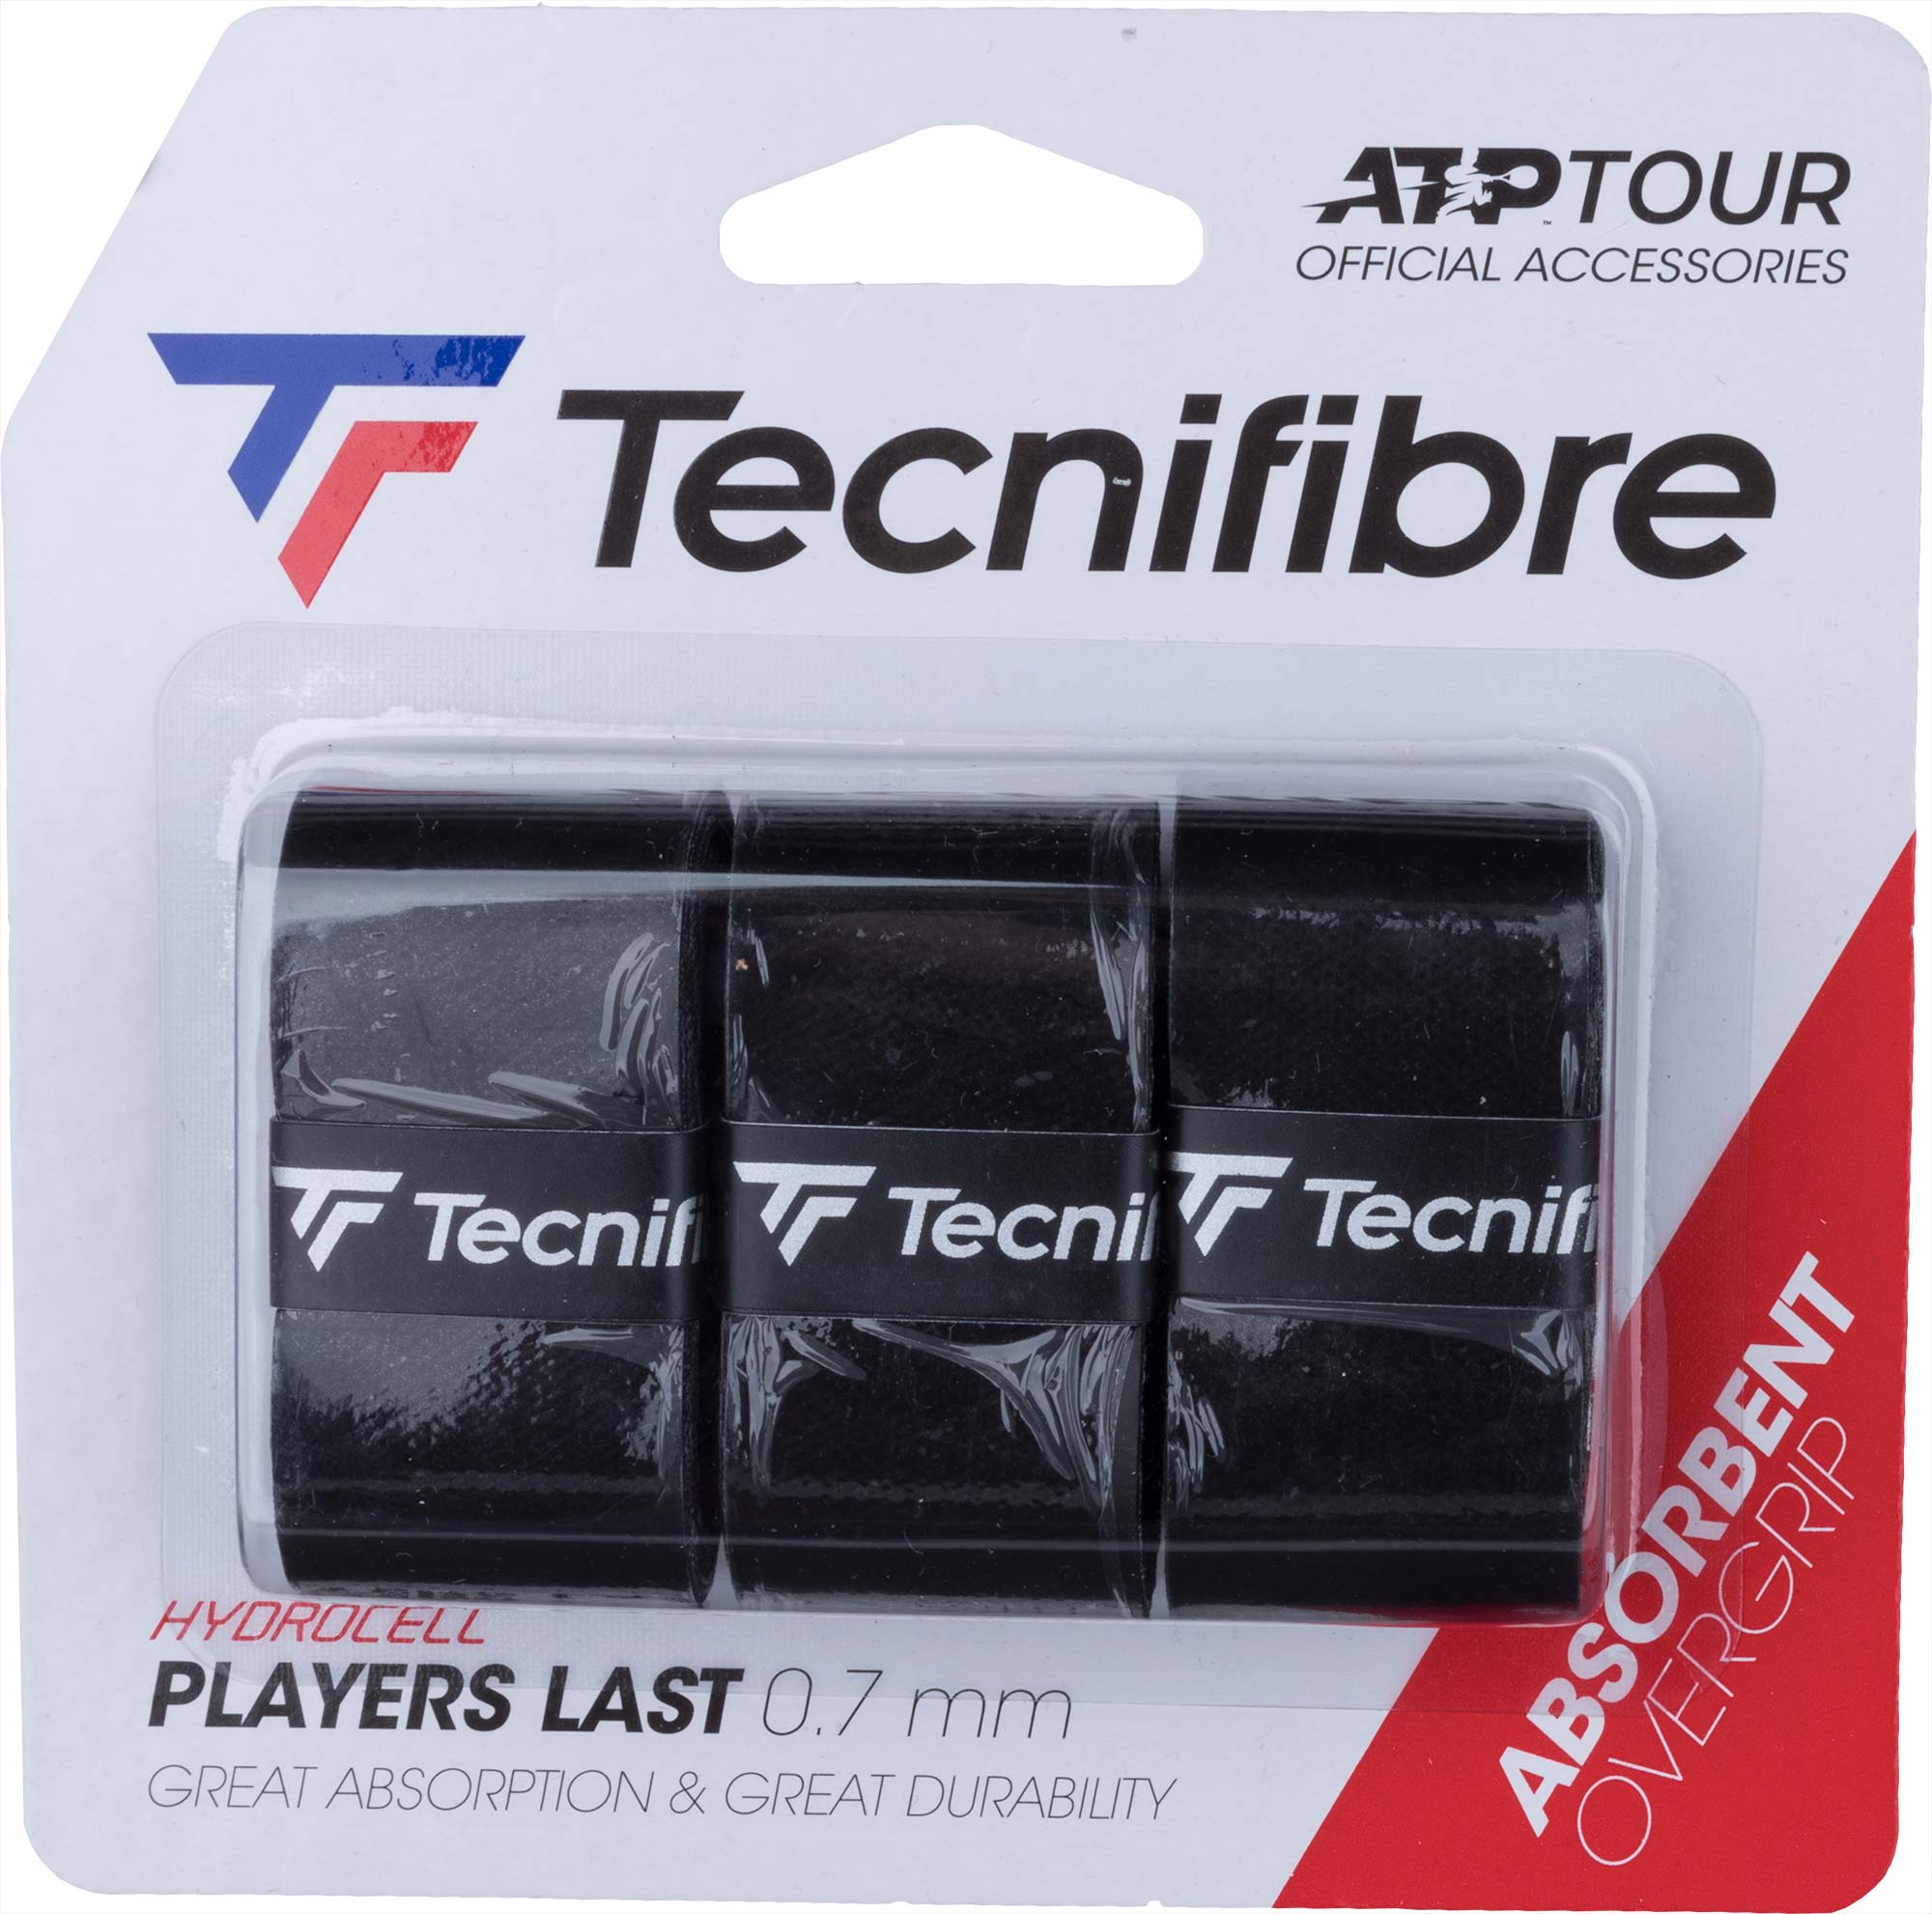 Tennis grip tape